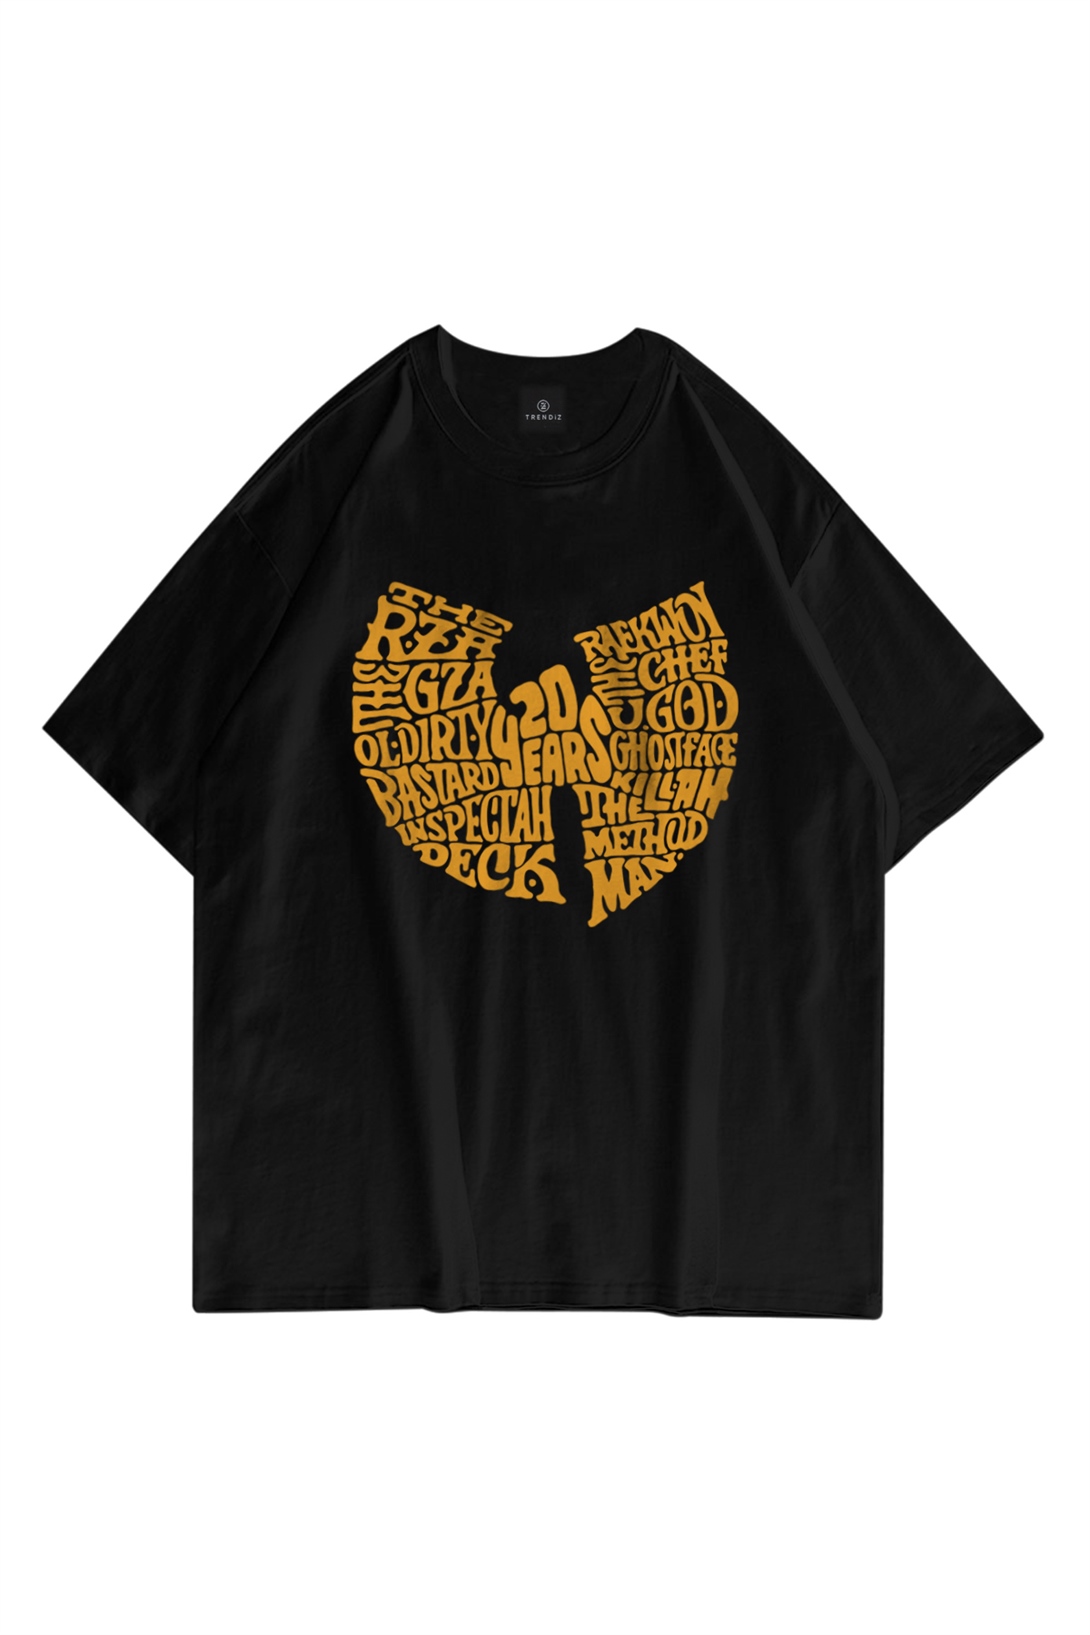 Trendiz Unisex Wu-Tang Clan 20 Years Siyah Tshirt